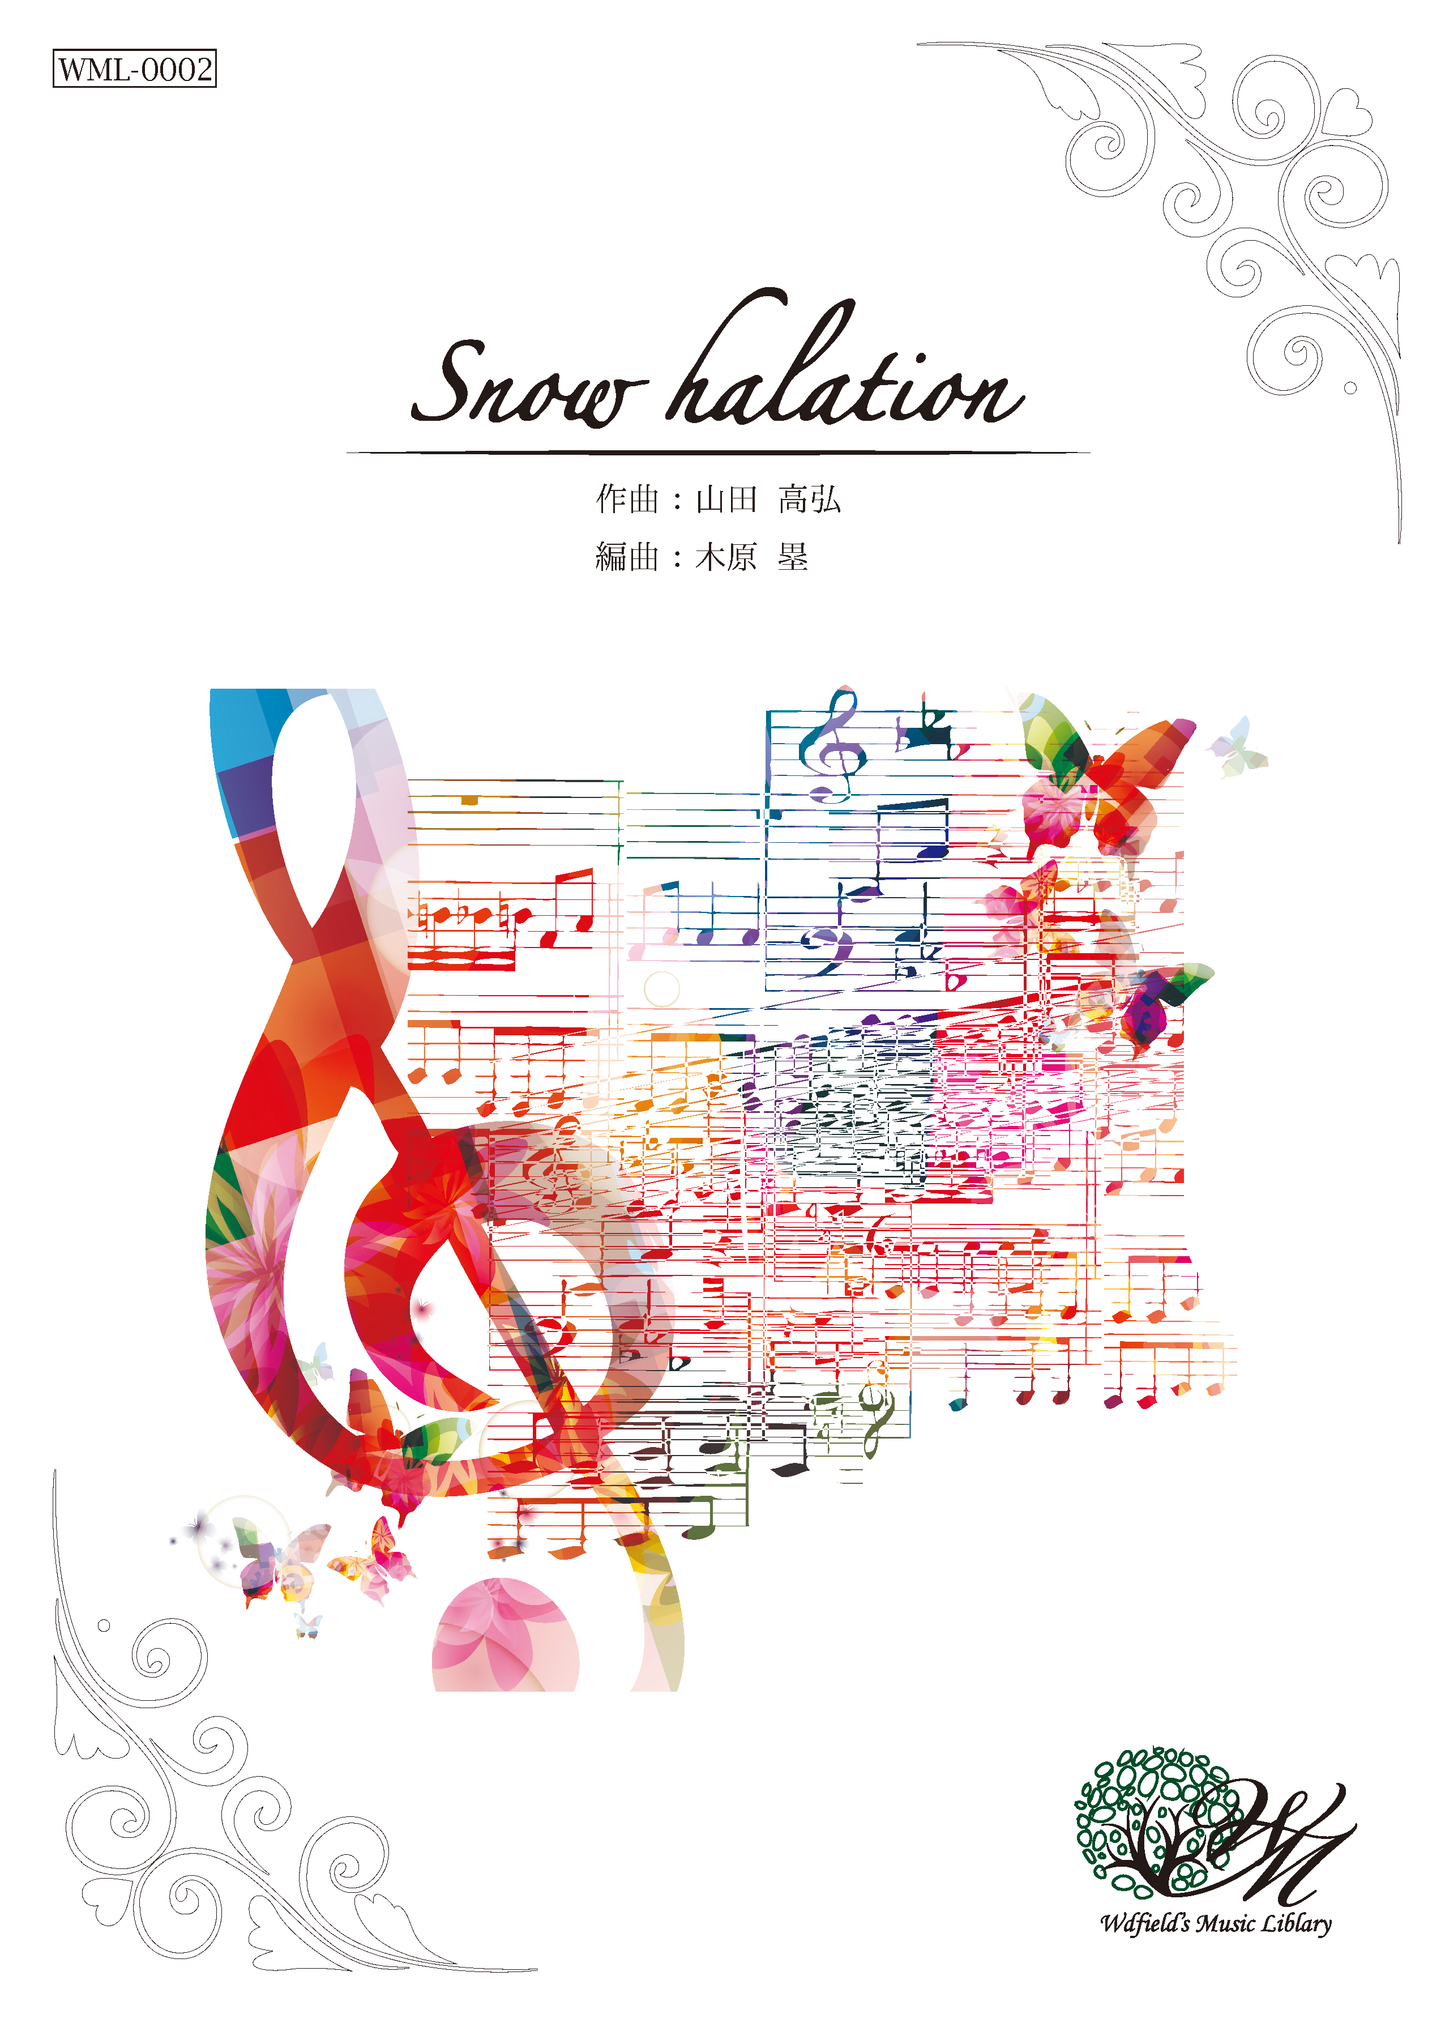 Snow halation  (From Love Live! School Idol Project)